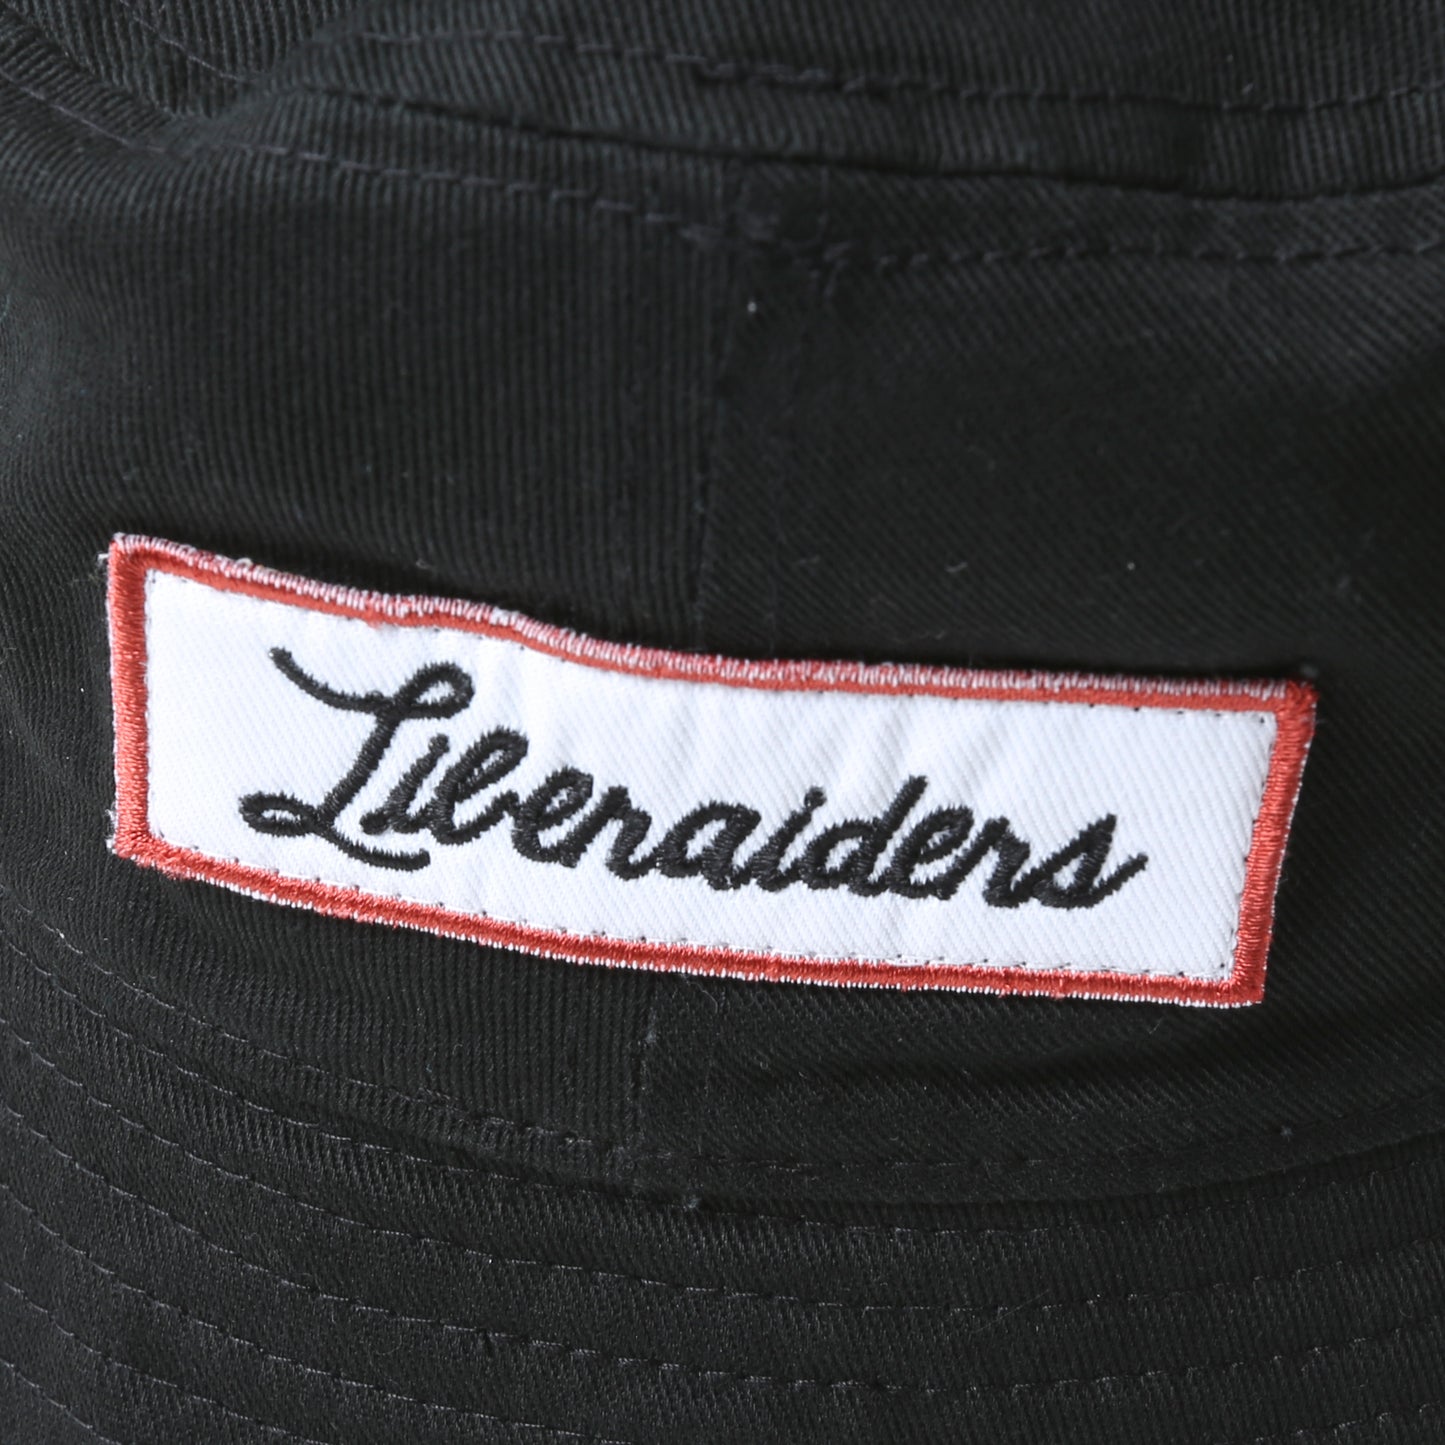 Liberaiders ® (リベレイダース)/ CHAMPIONSHIP BUCKET HAT 70902 / BLACK